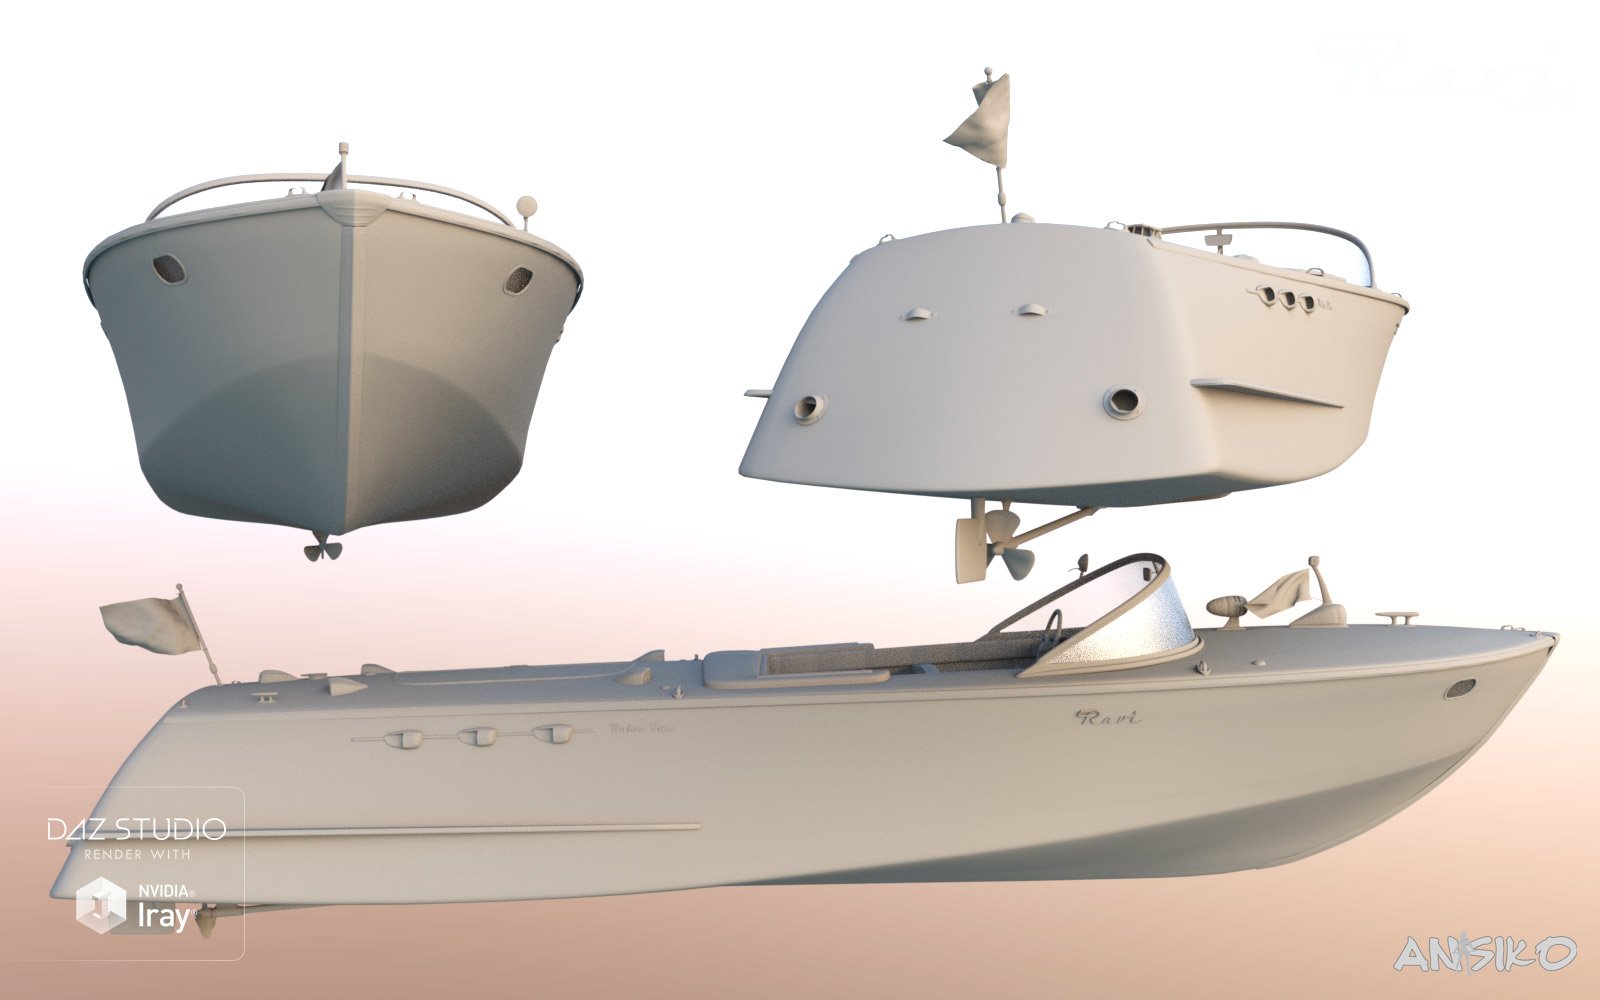 Ravi Speedboat by: Ansiko, 3D Models by Daz 3D